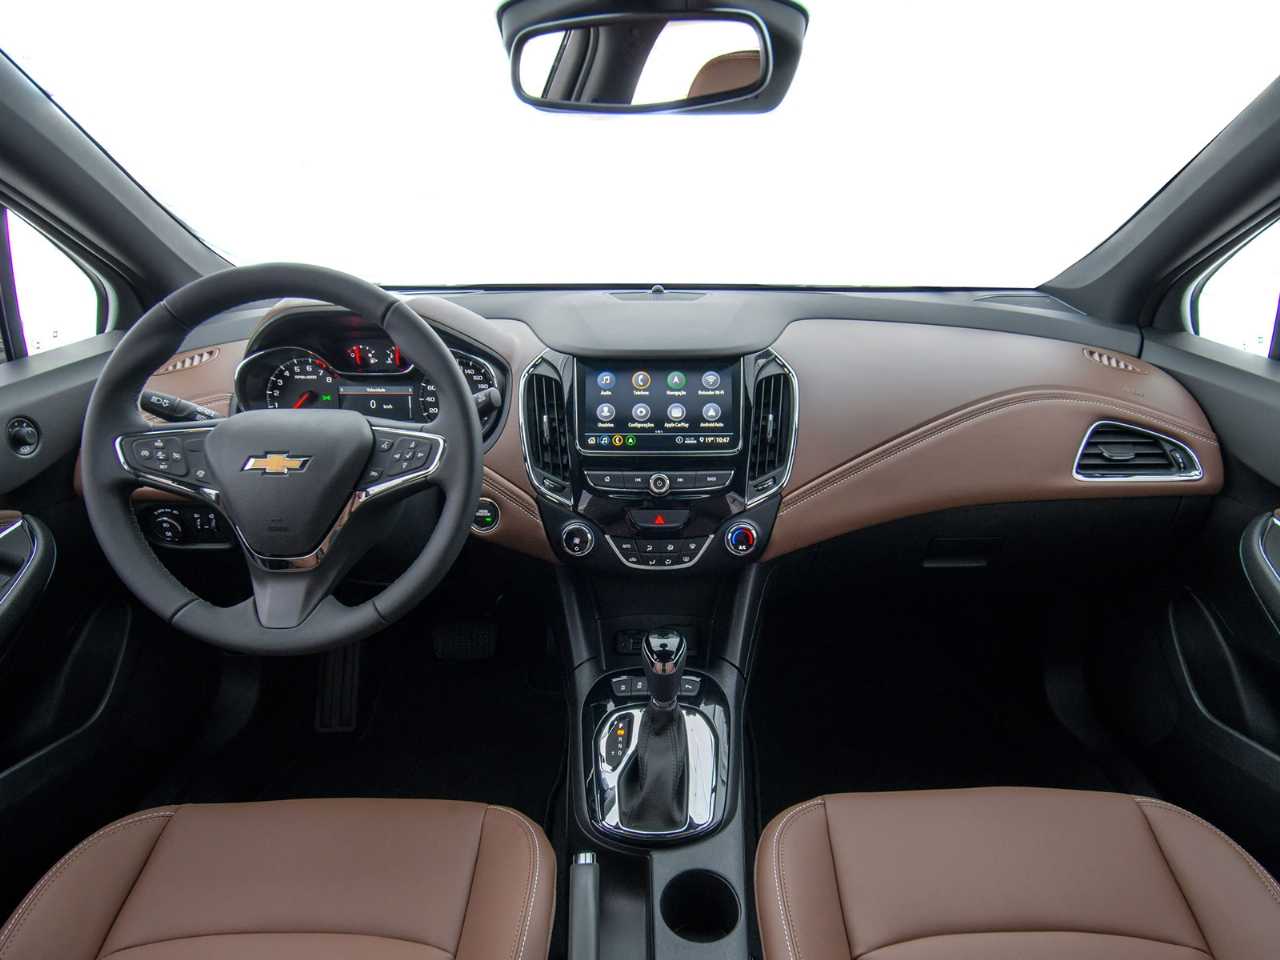 ChevroletCruze Sport6 2020 - painel